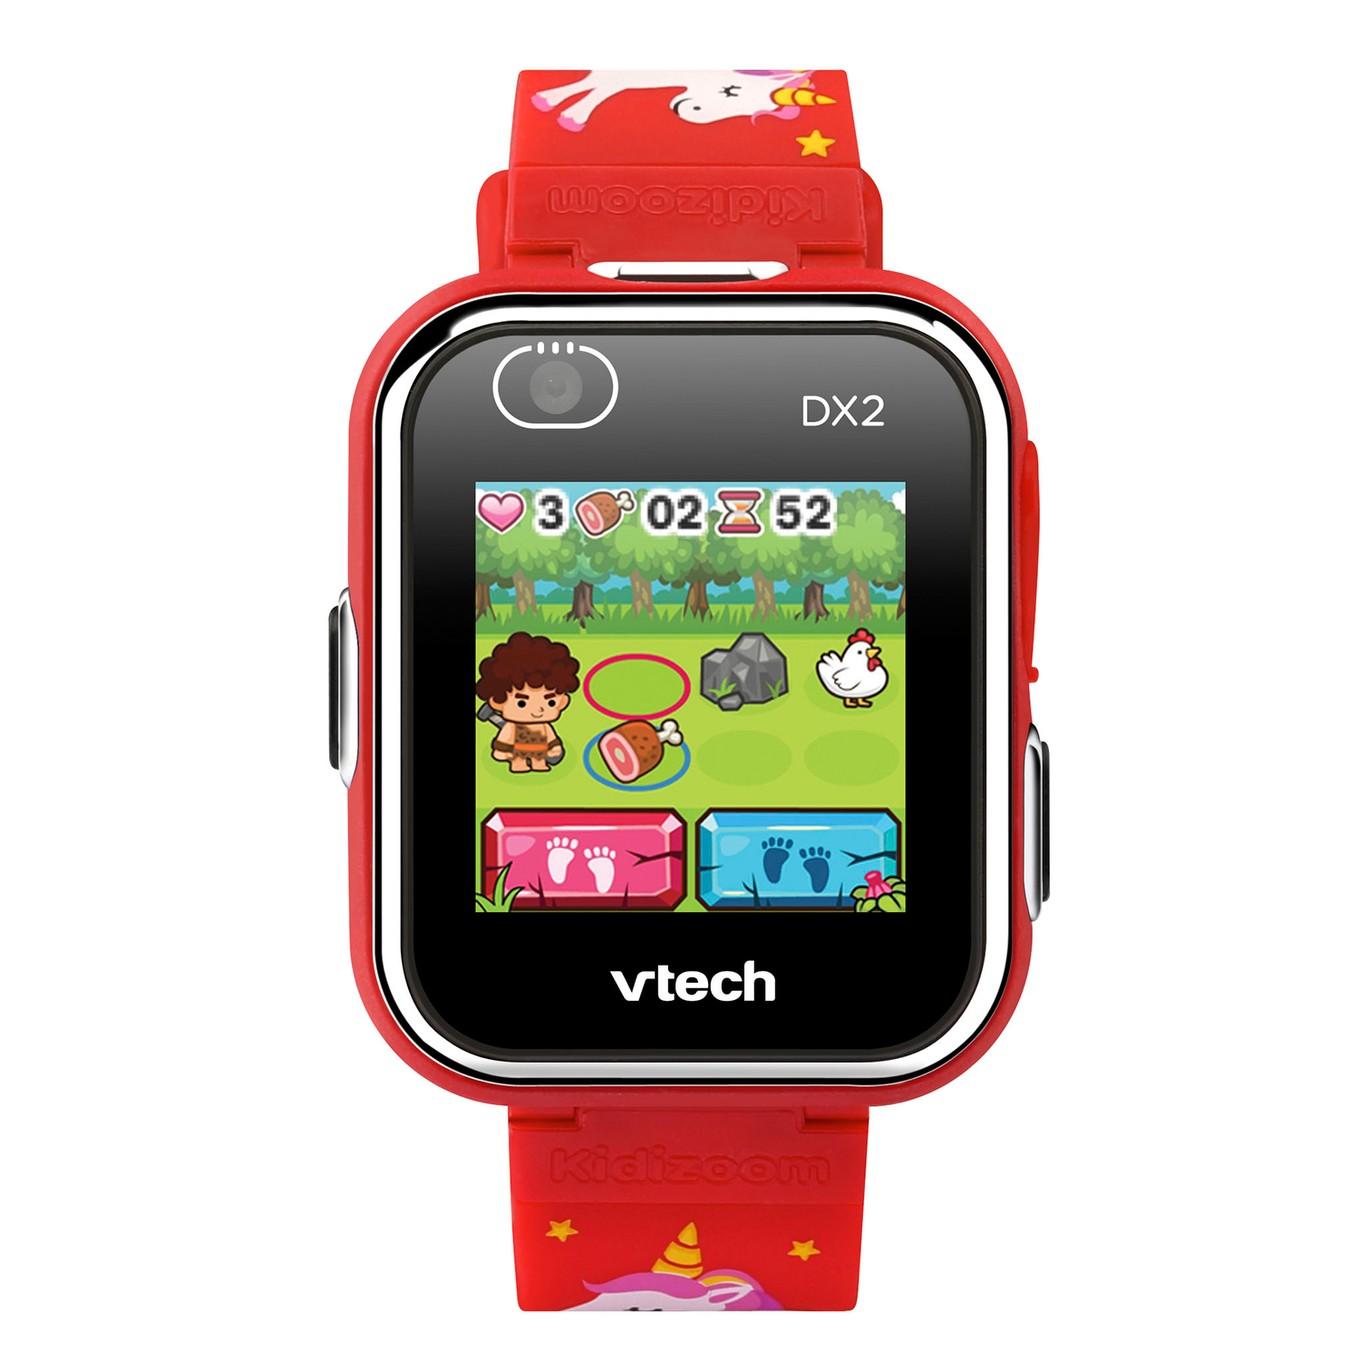 vtech game watch